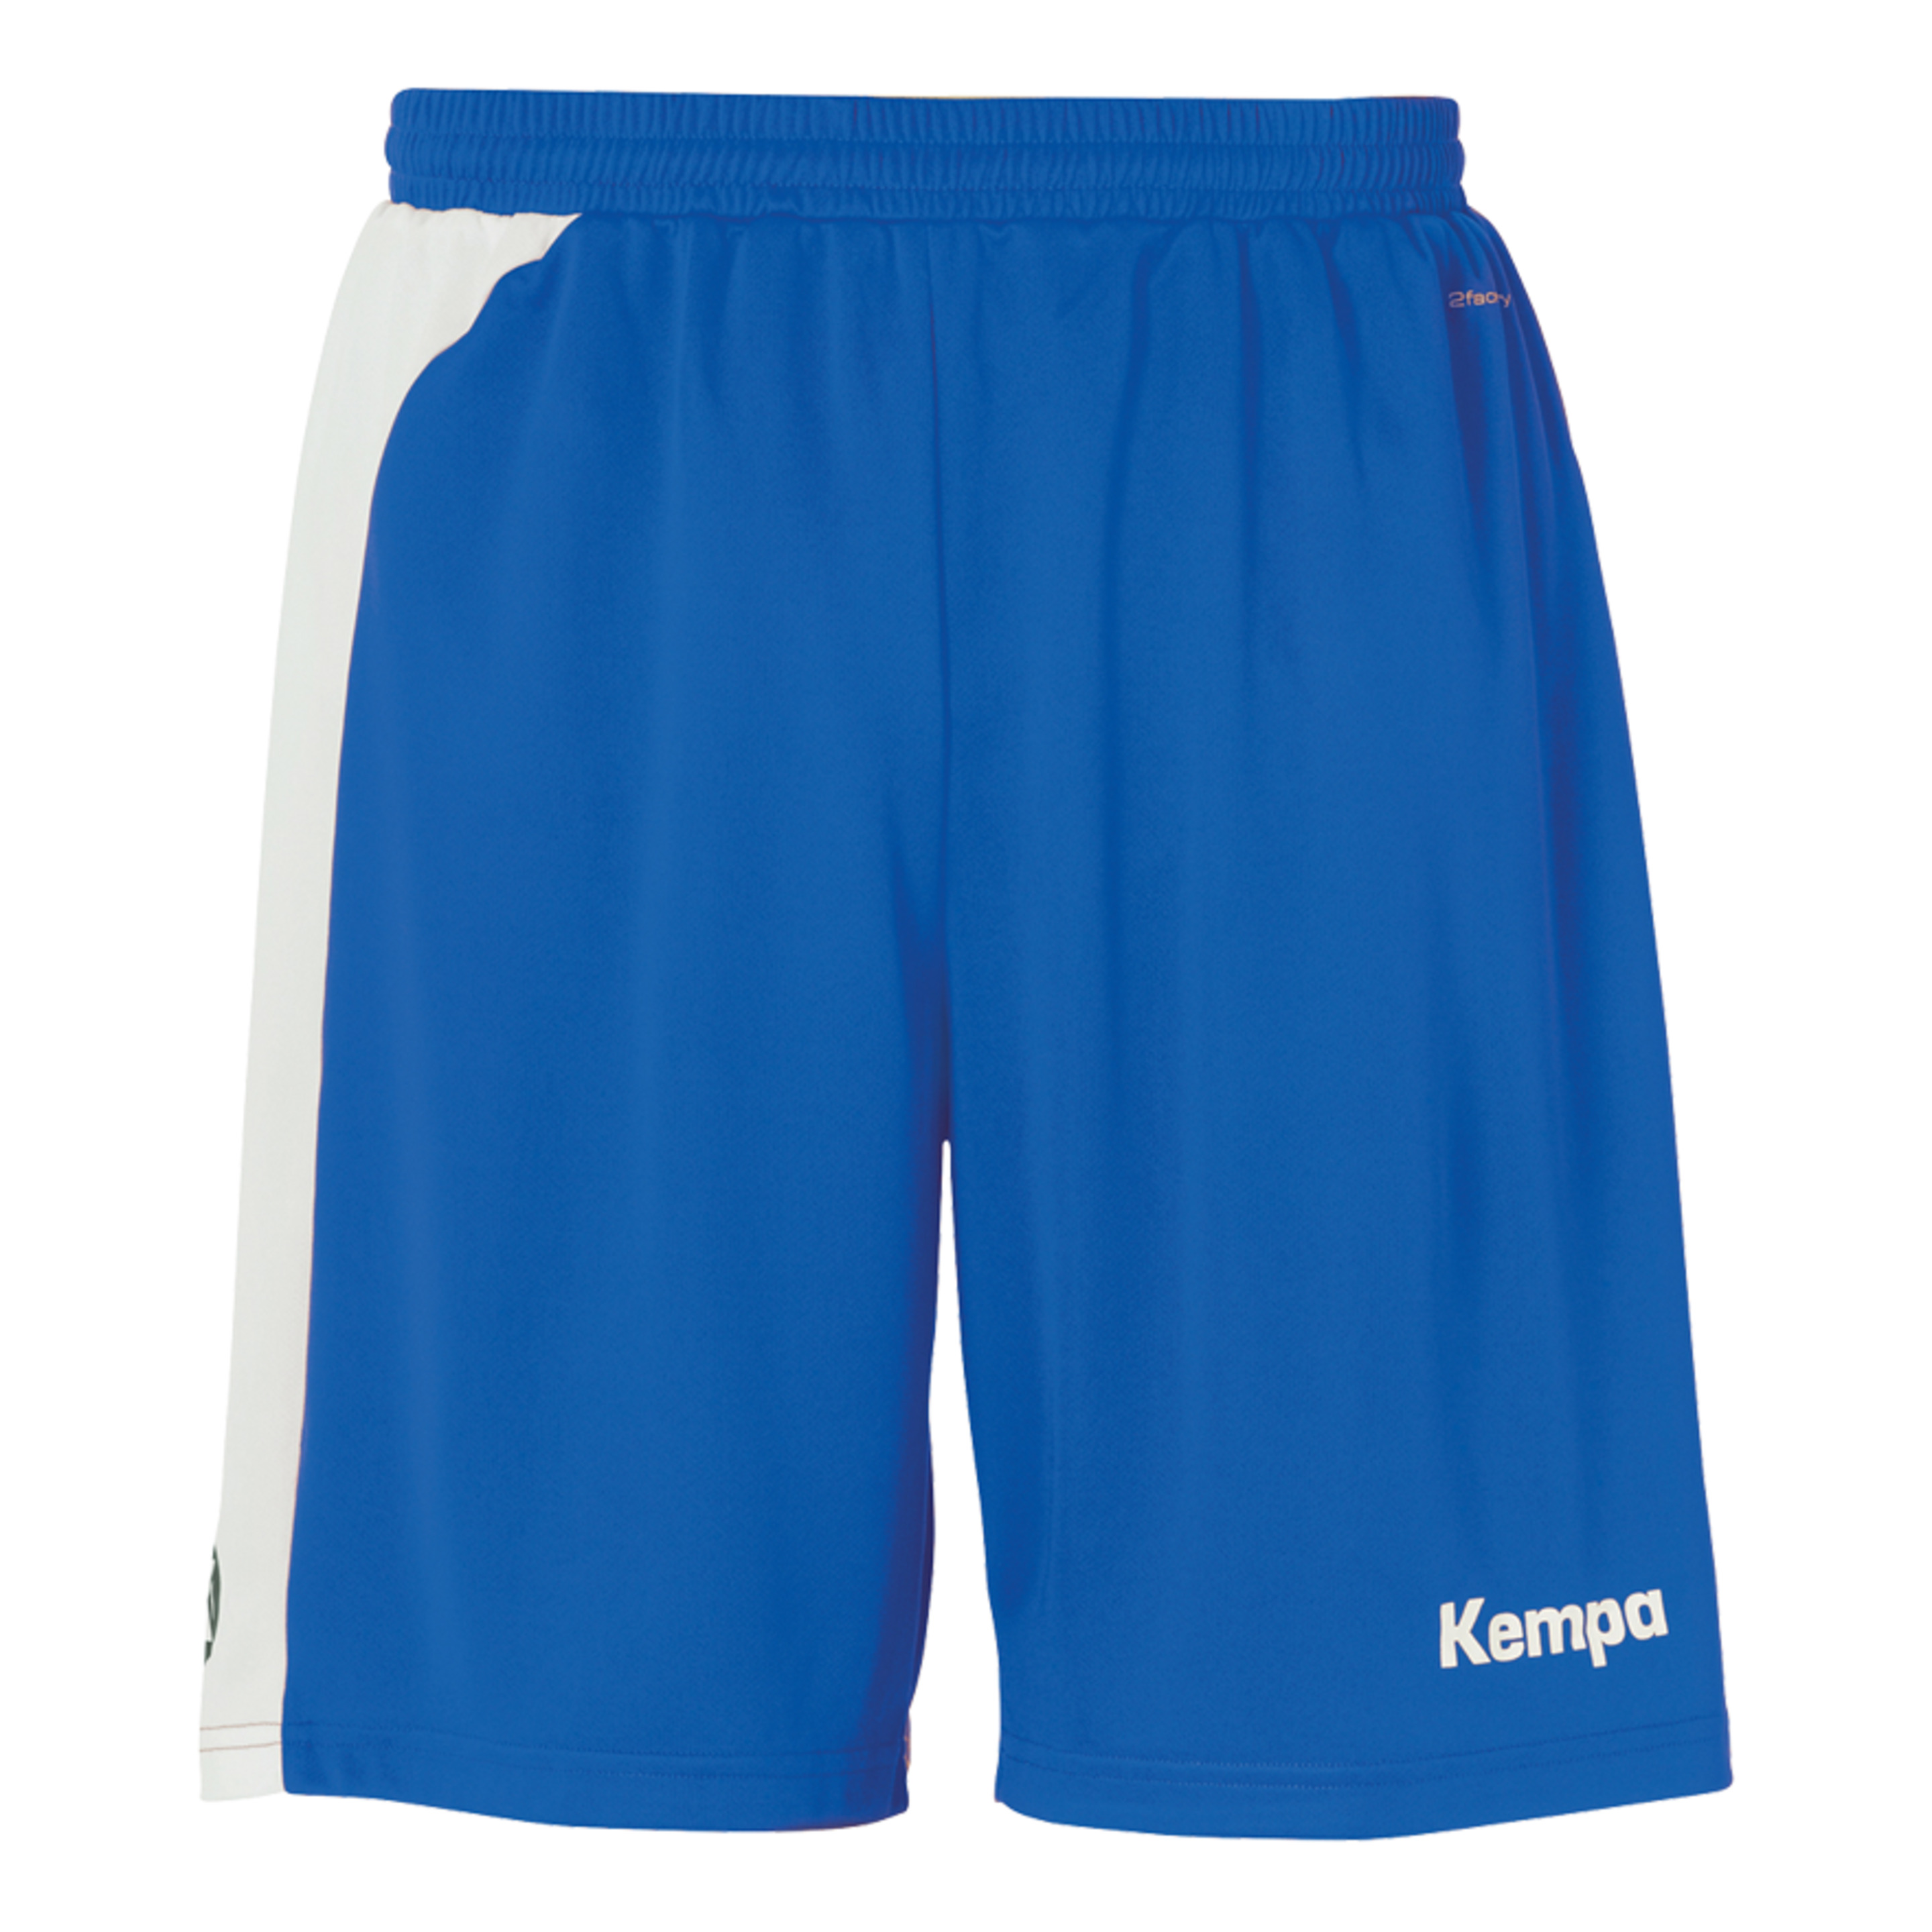 Peak Shorts Azul Royal/blanco Kempa